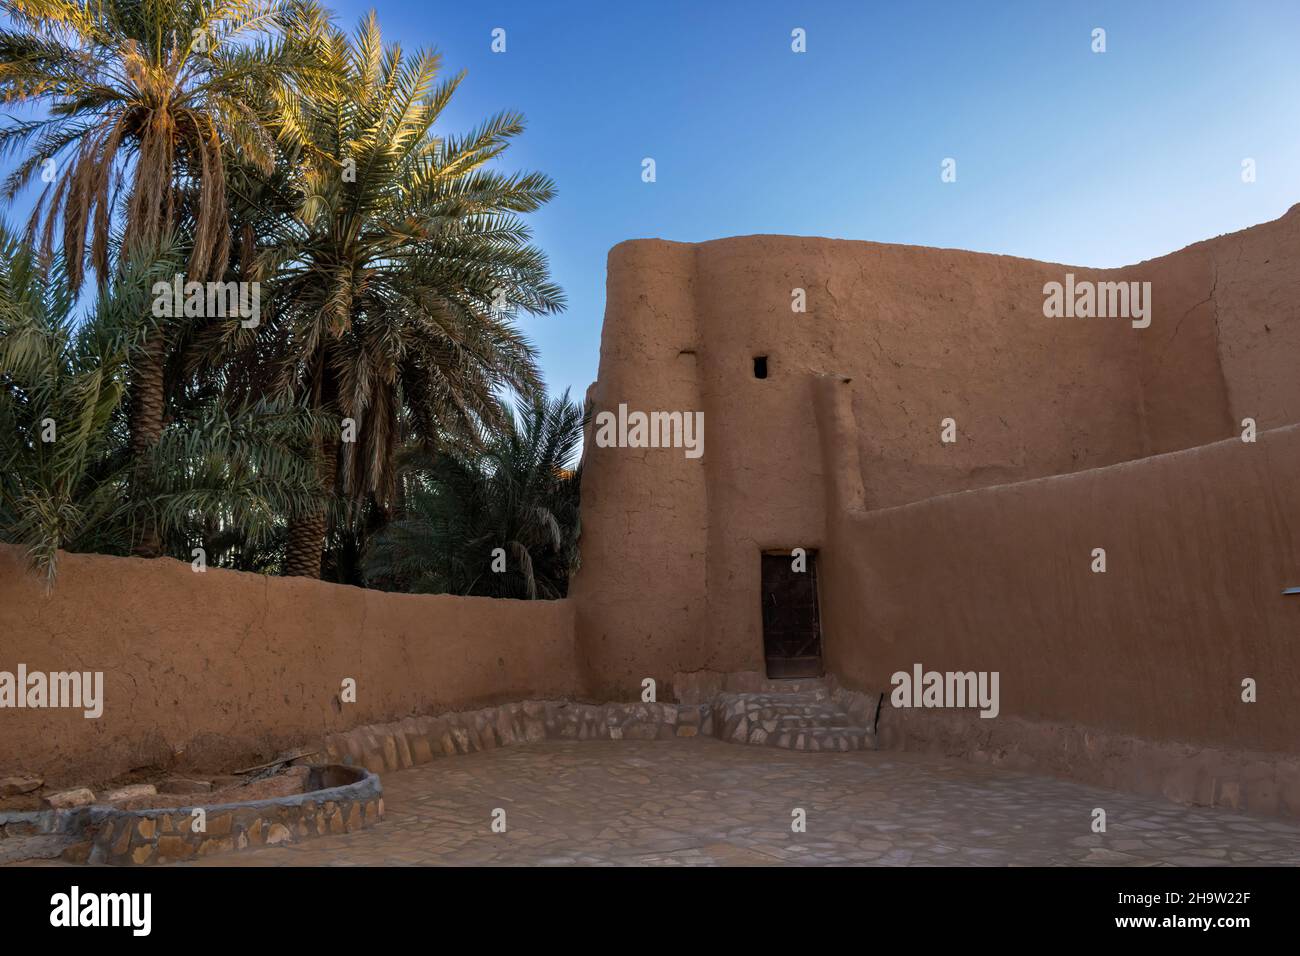 Tradizionale casa araba di mattoni di fango a Ushaiqer, Arabia Saudita Foto Stock